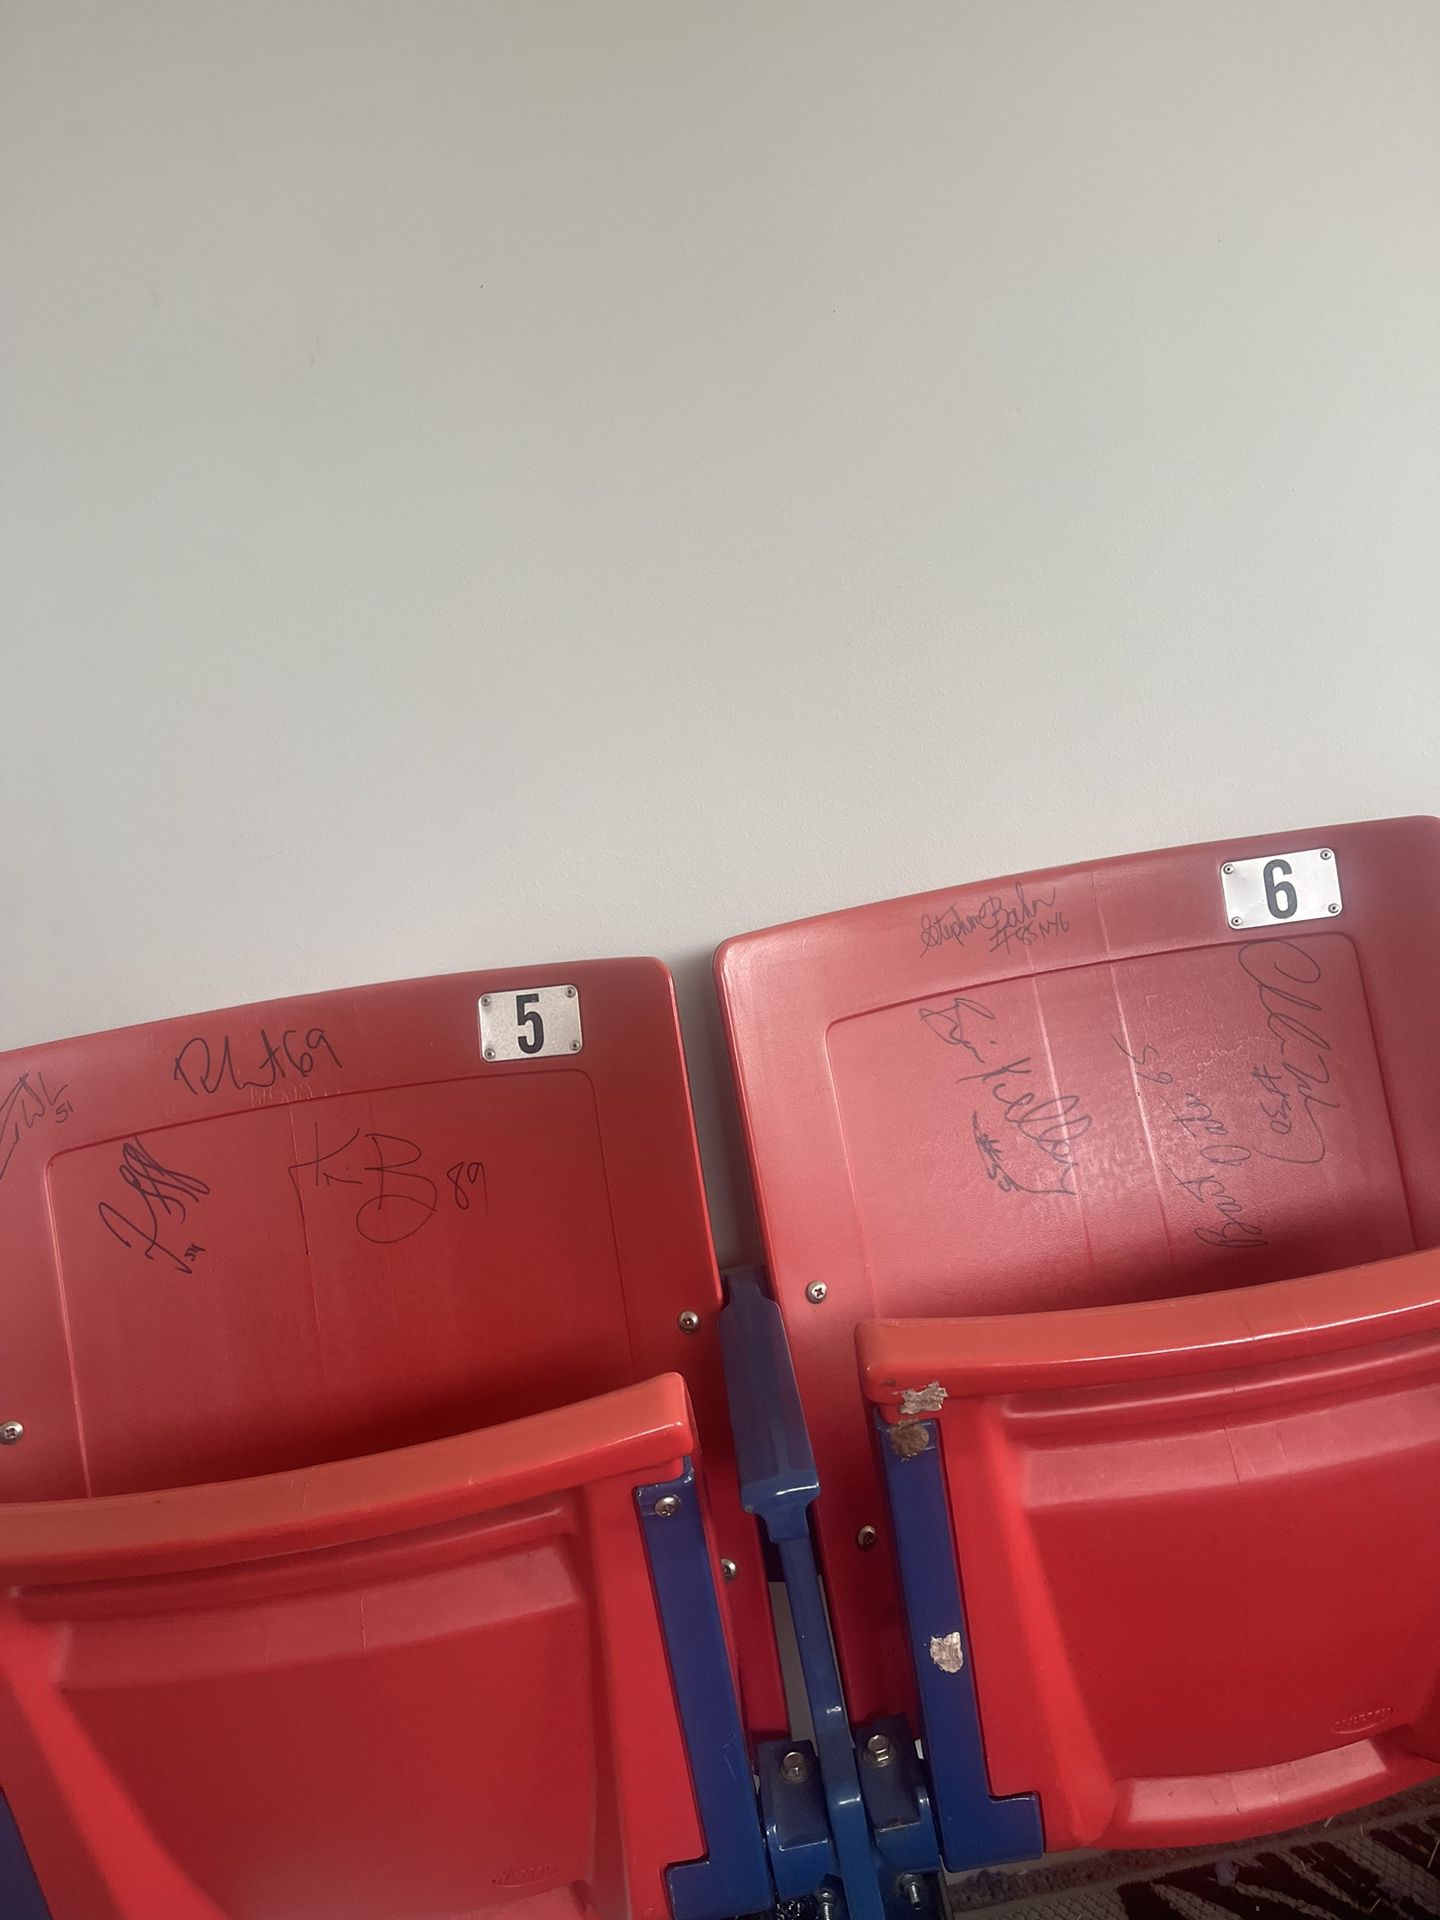 Autographed Giants Seats 